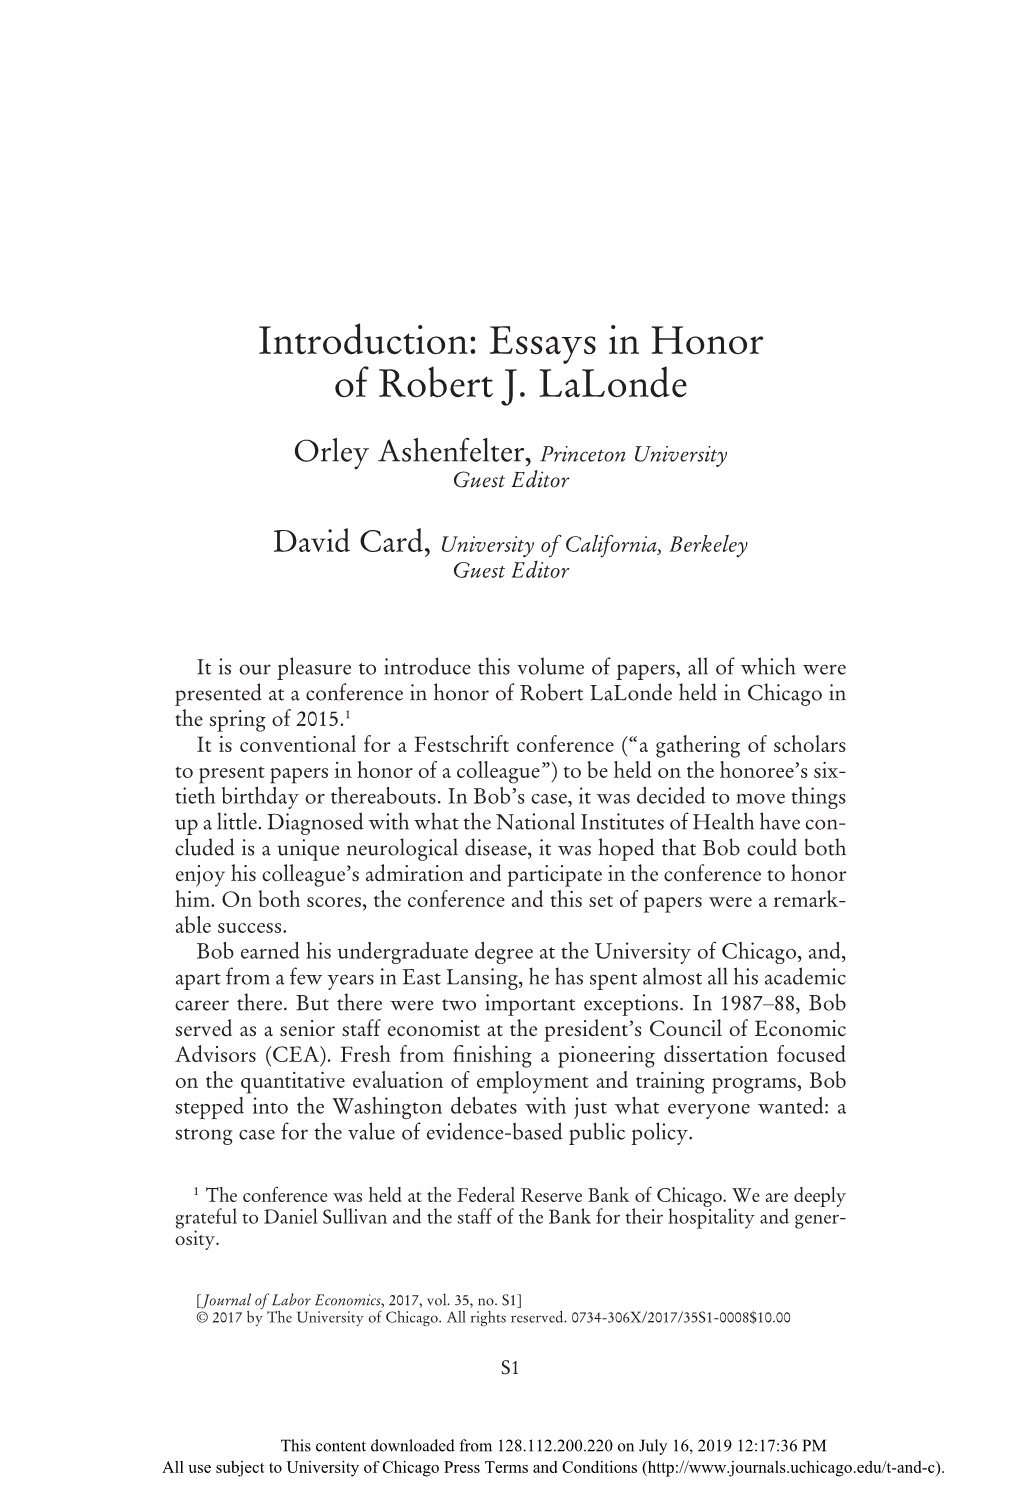 Essays in Honor of Robert J. Lalonde